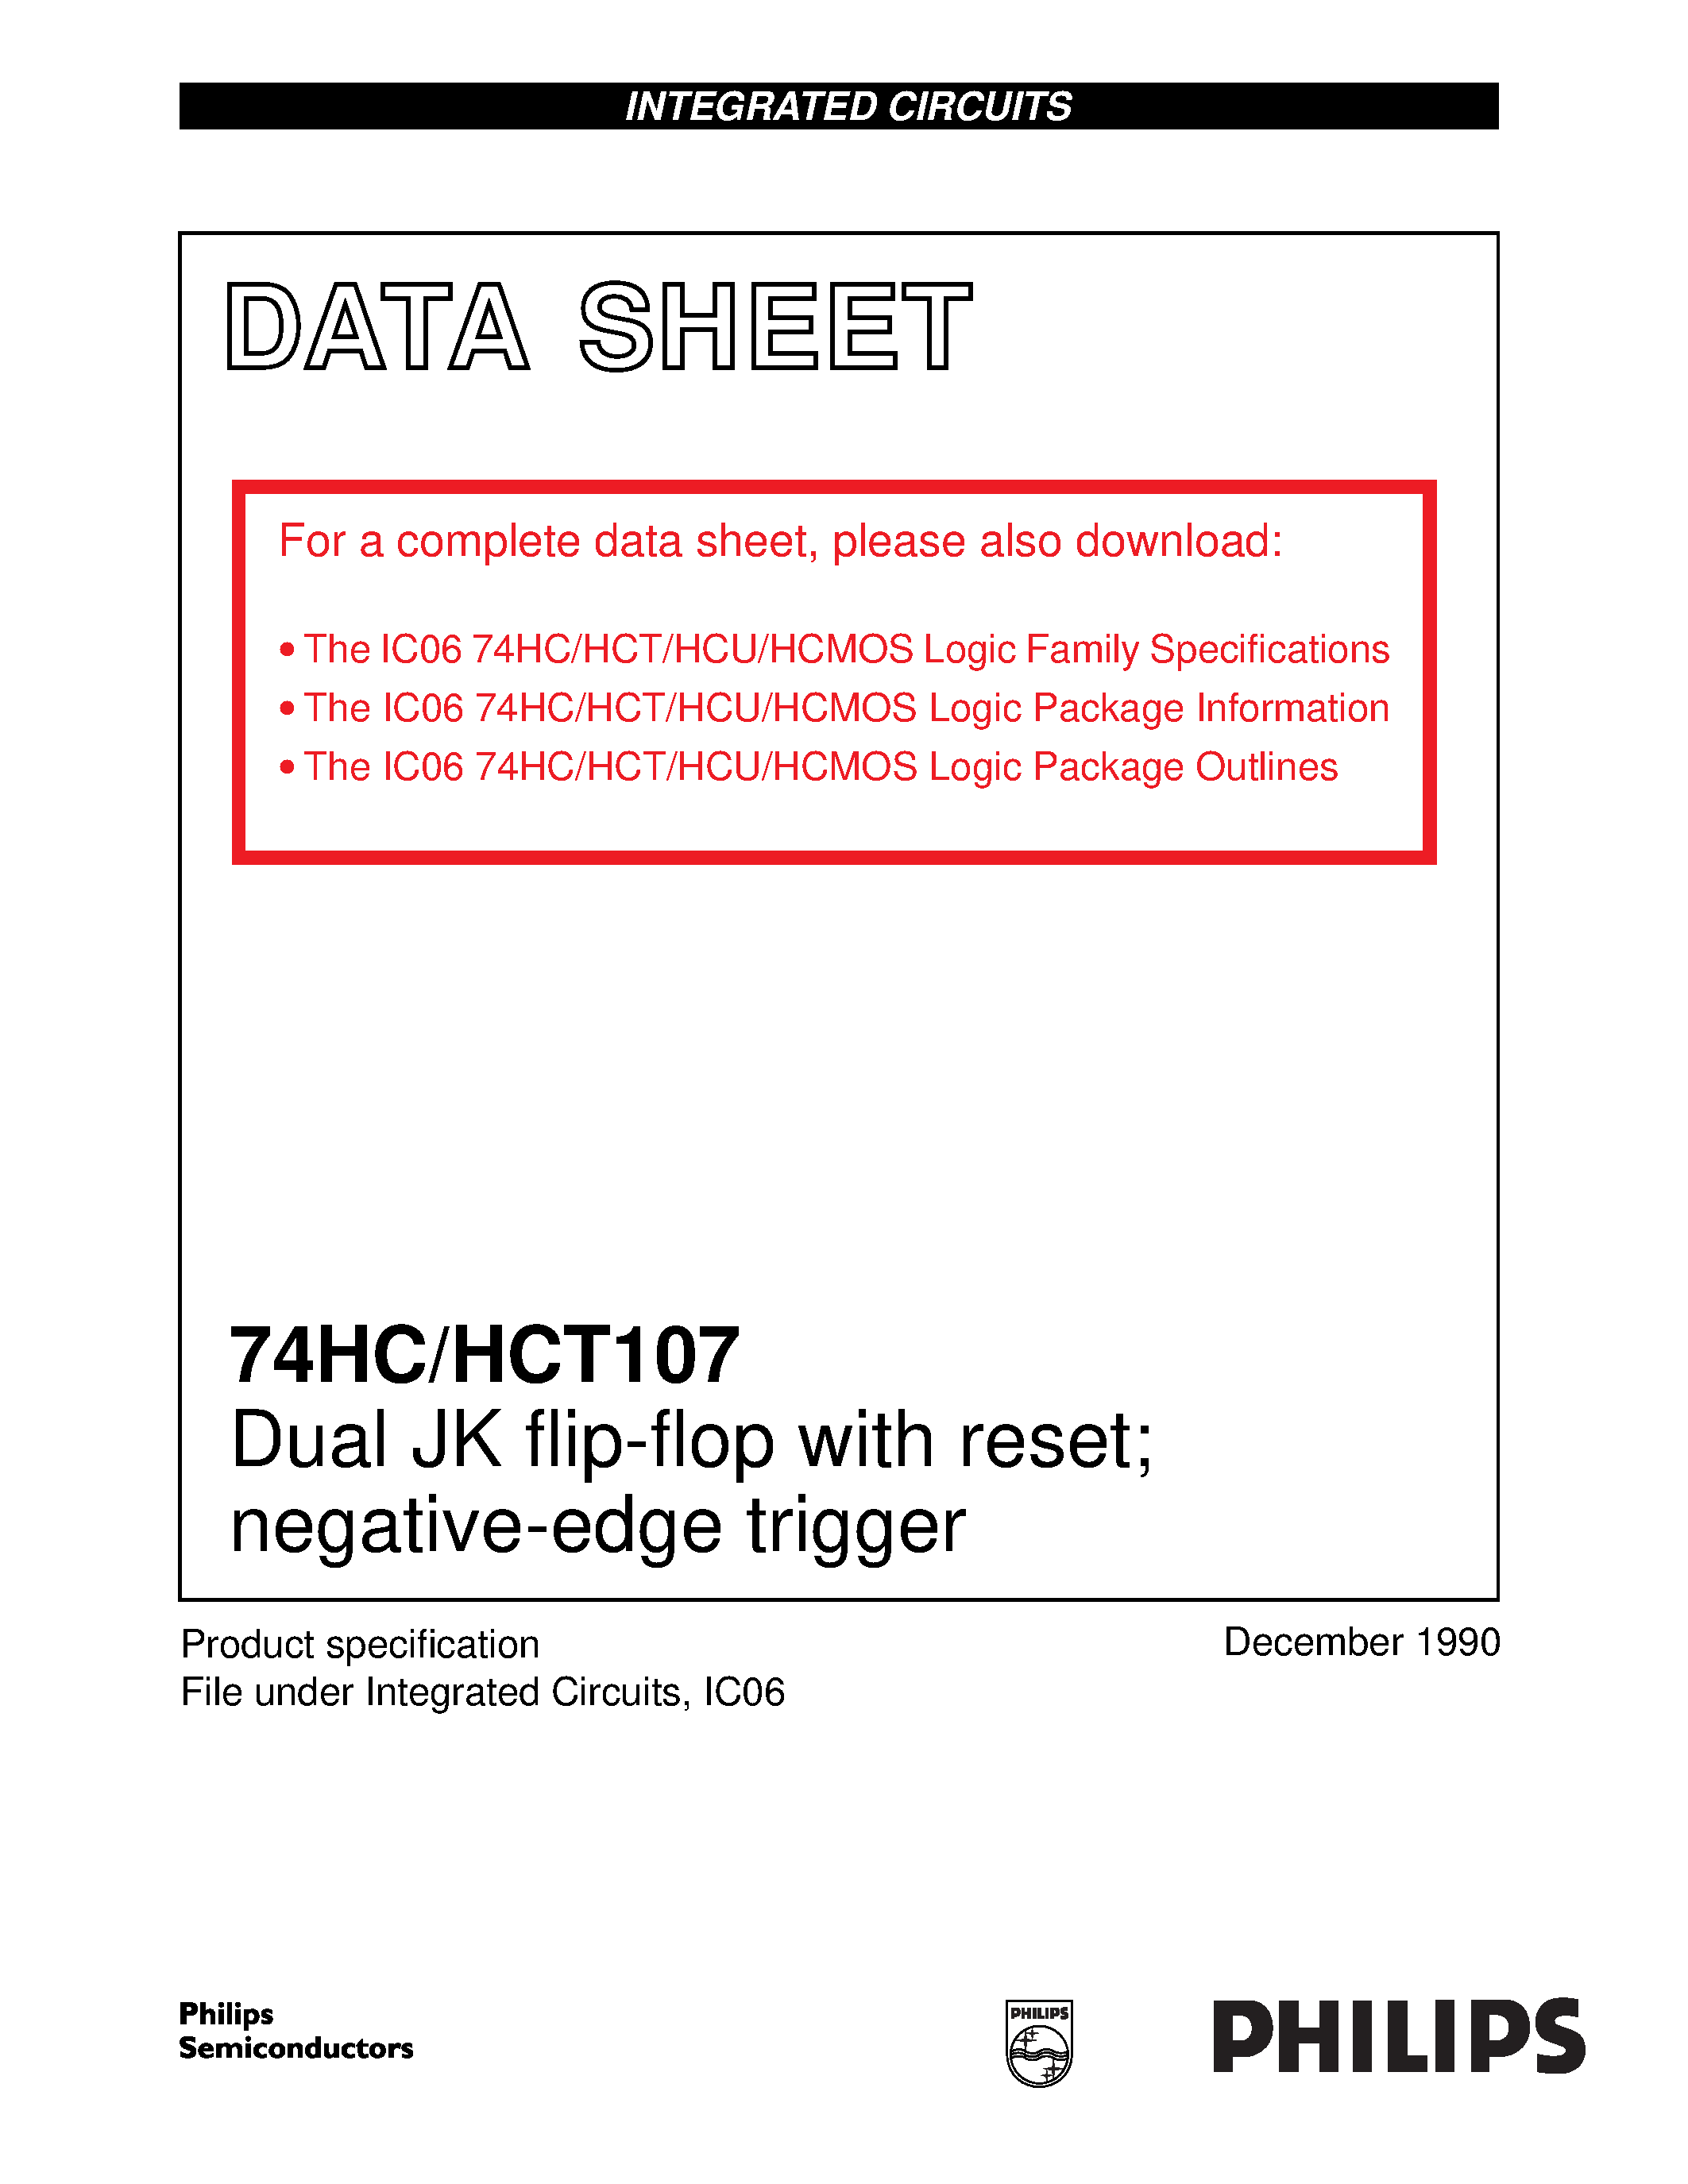 Datasheet 74HCT107 - Dual JK flip-flop with reset negative-edge trigger page 1